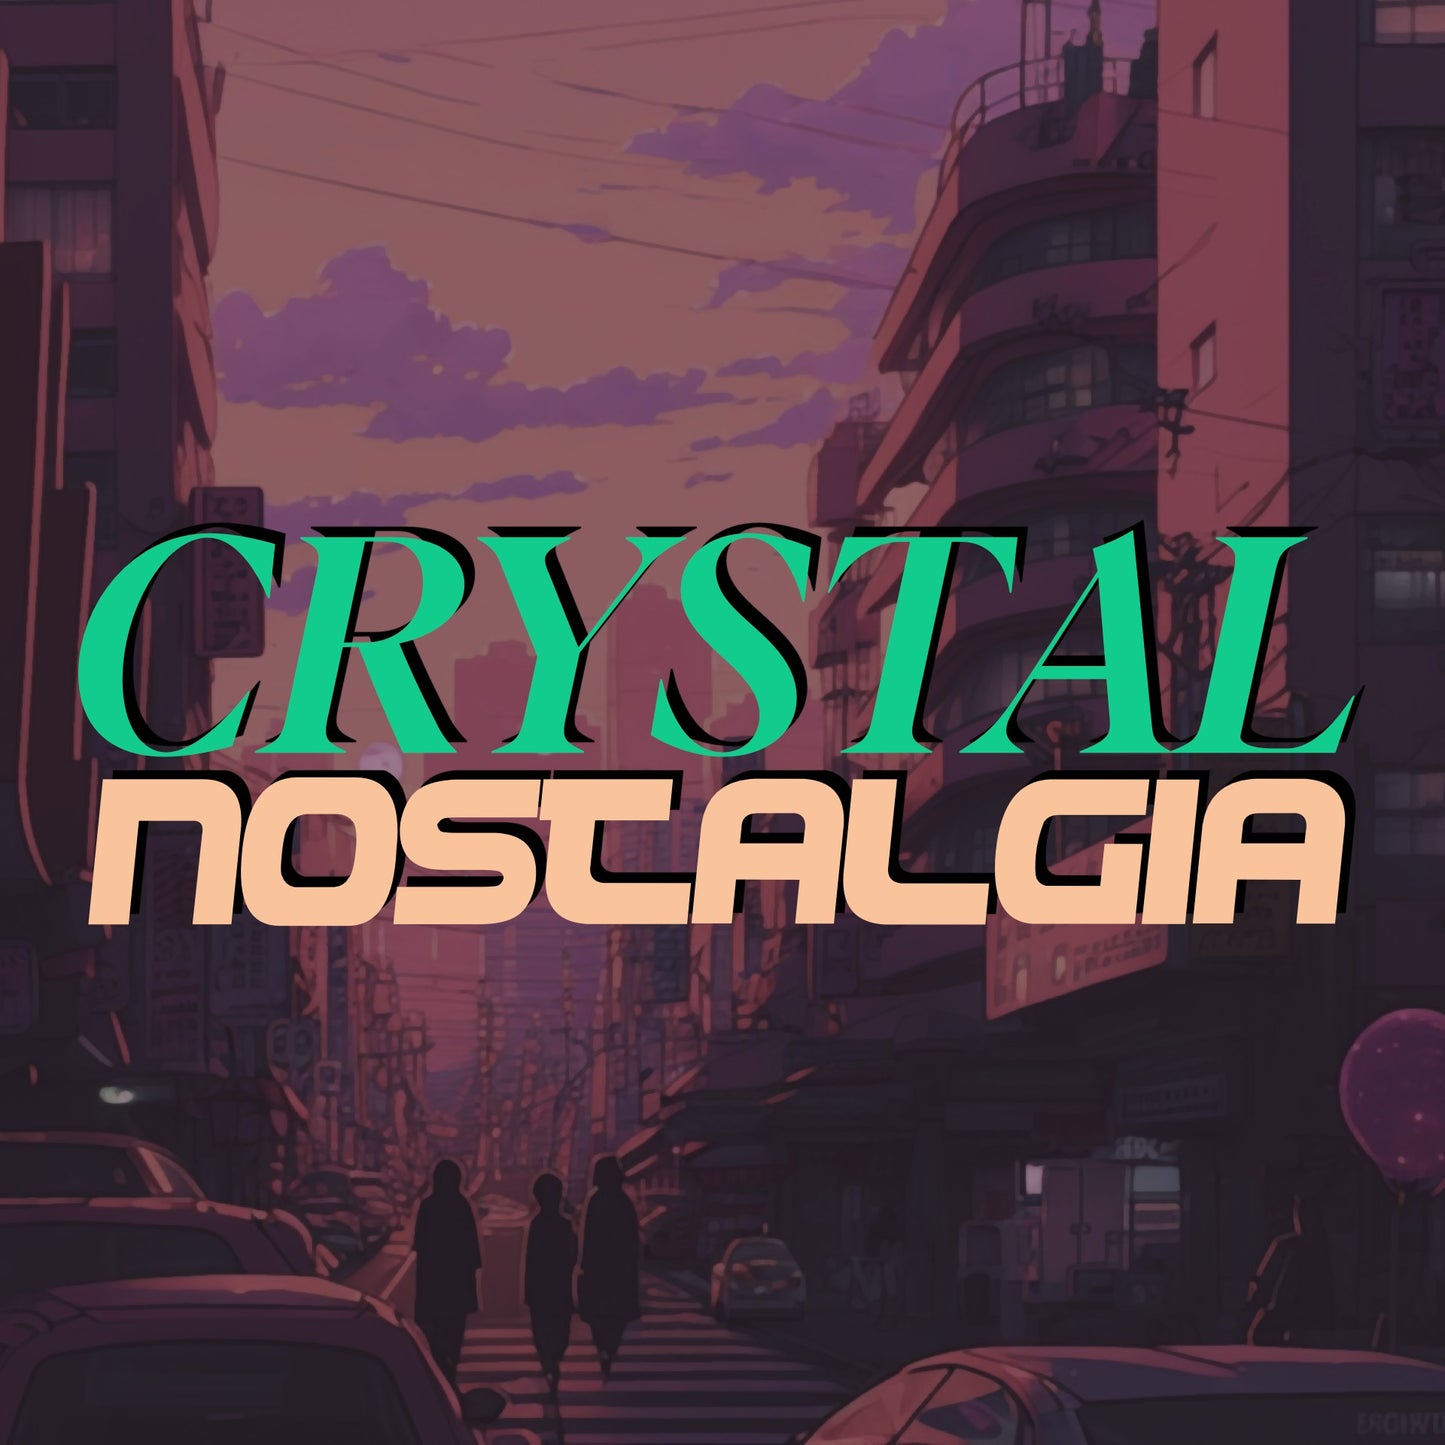 [OLD] Crystal Nostalgia - Live Show Merch